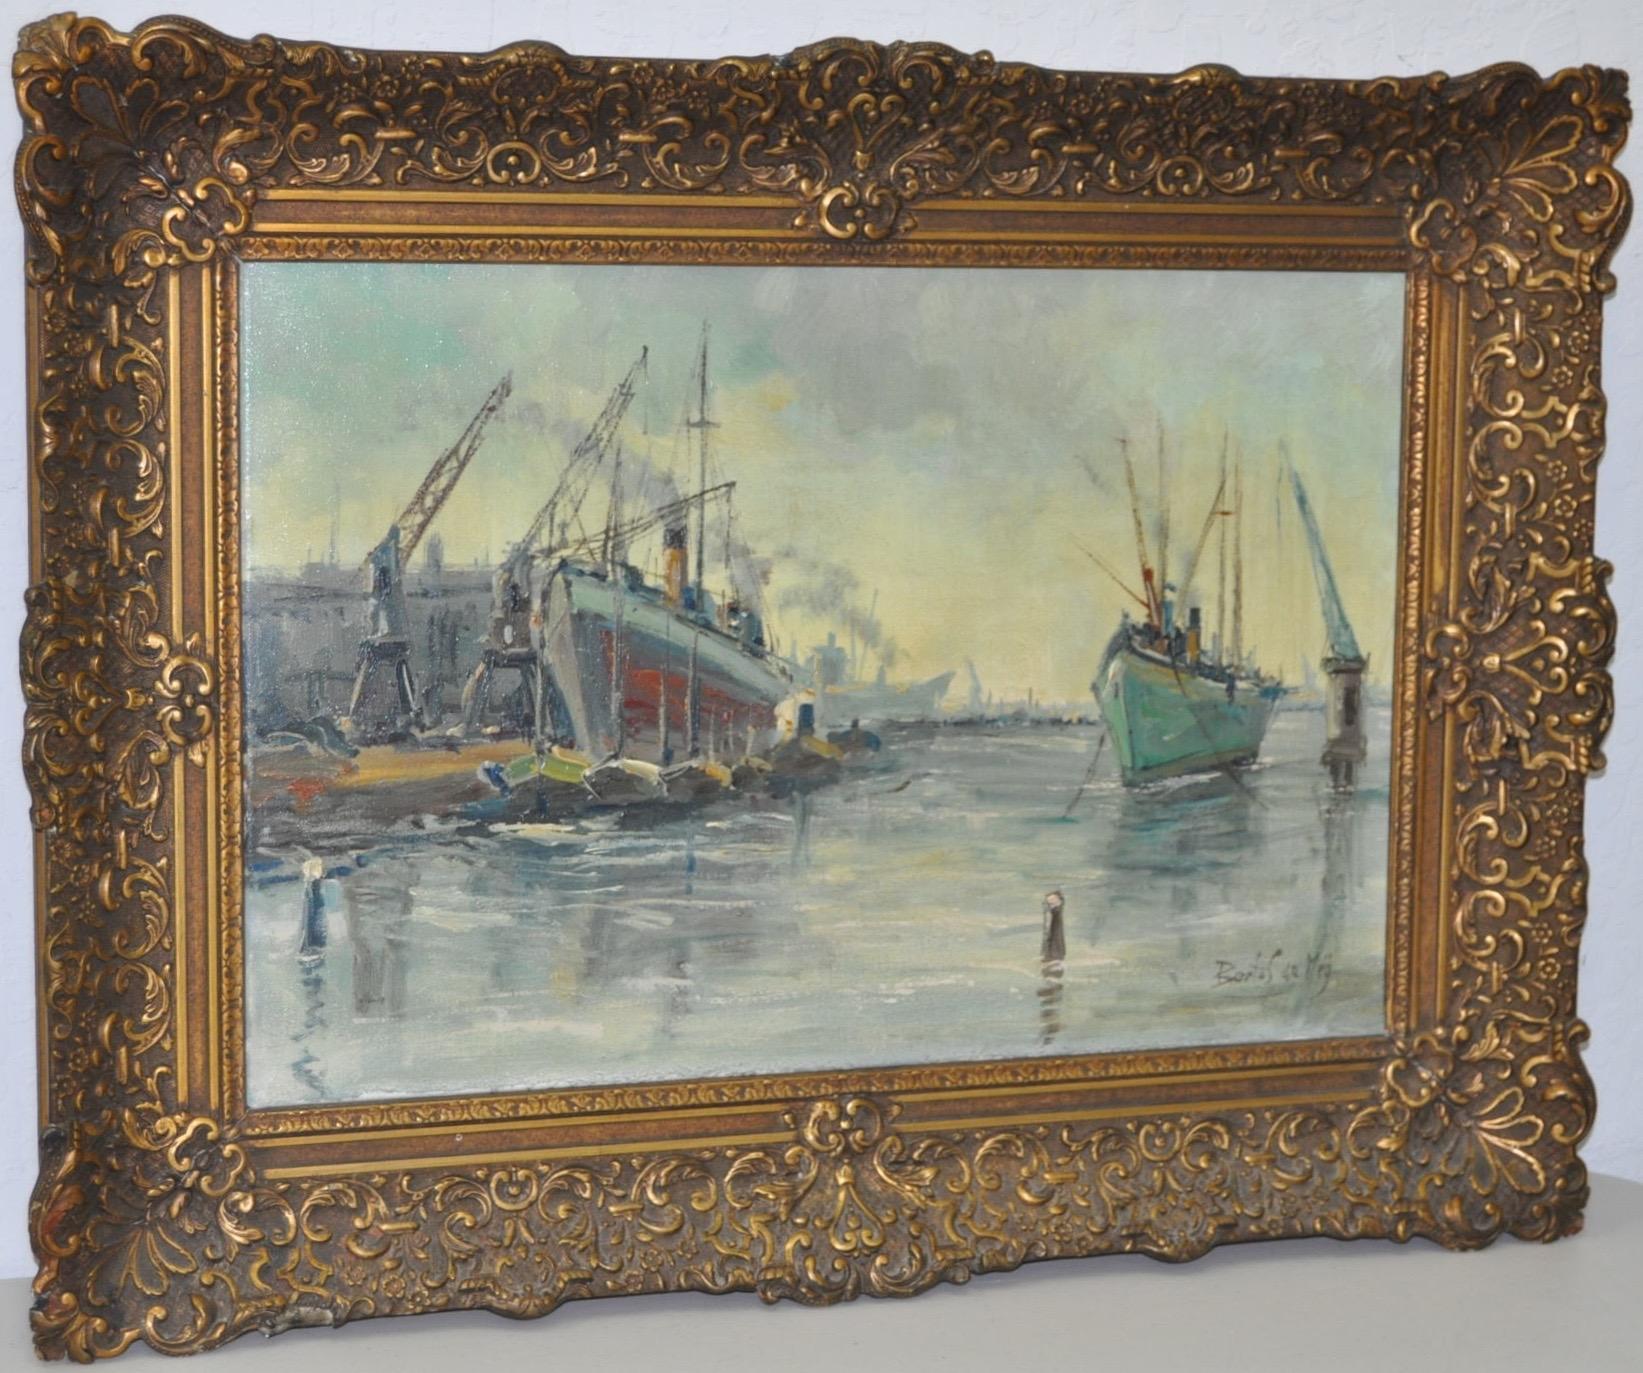 Bertus De Meij Landscape Painting -  Bertus de Meij  Original Oil Painting "Dutch Harbor" c.1940s